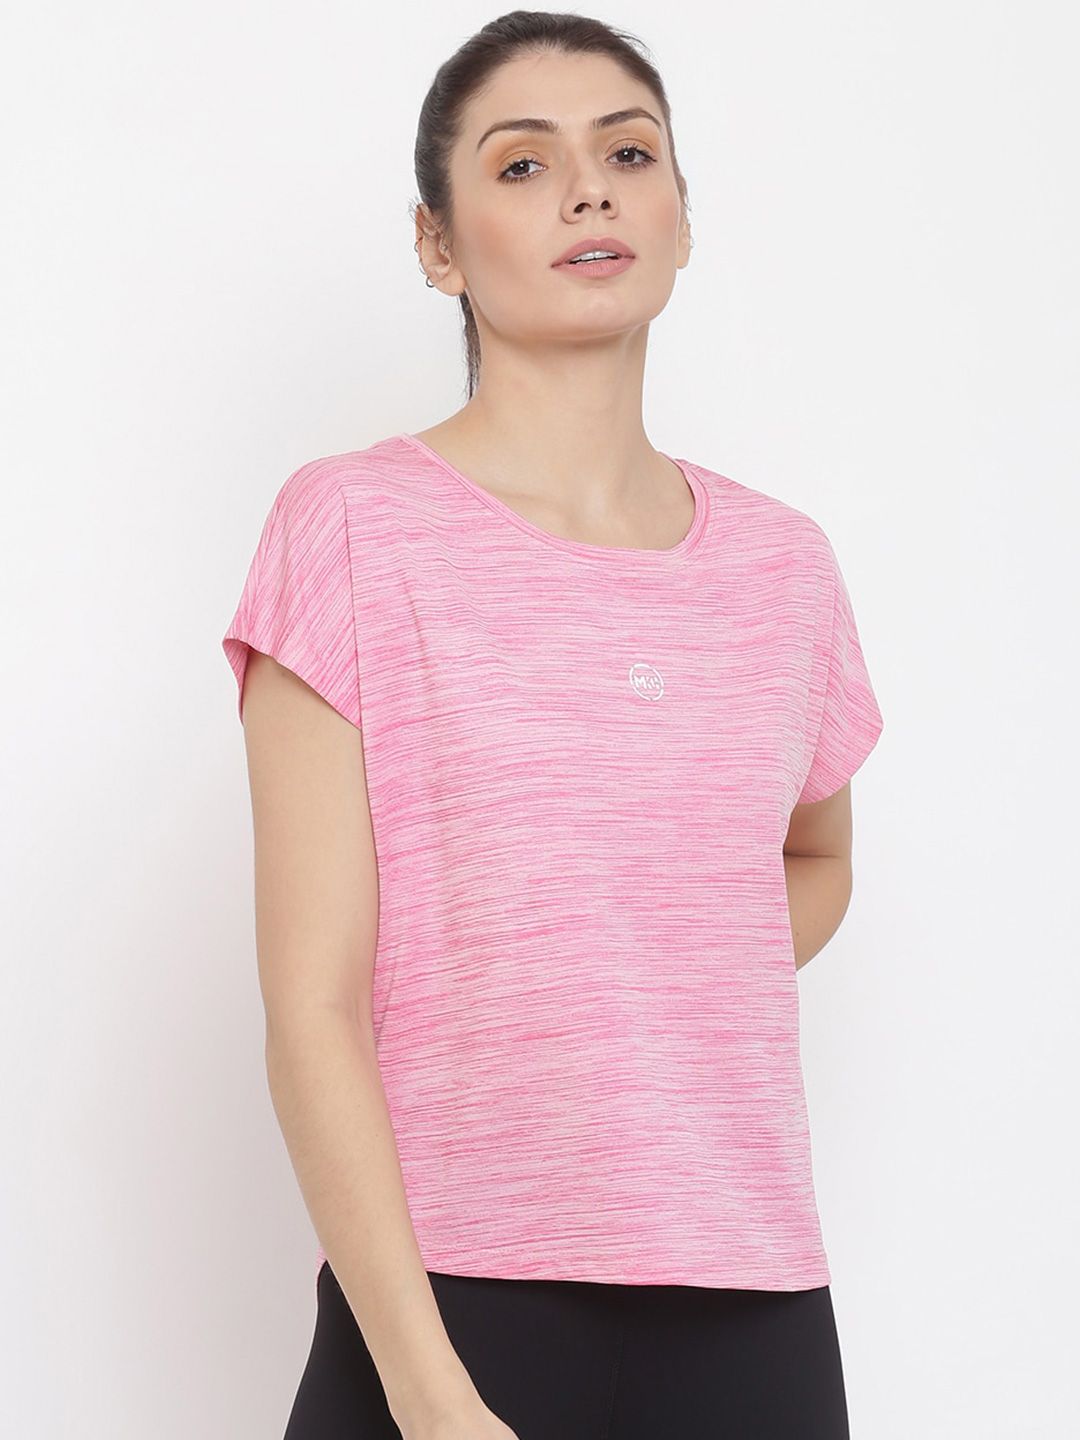 MKH Women Pink Striped Dri-FIT T-shirt Price in India